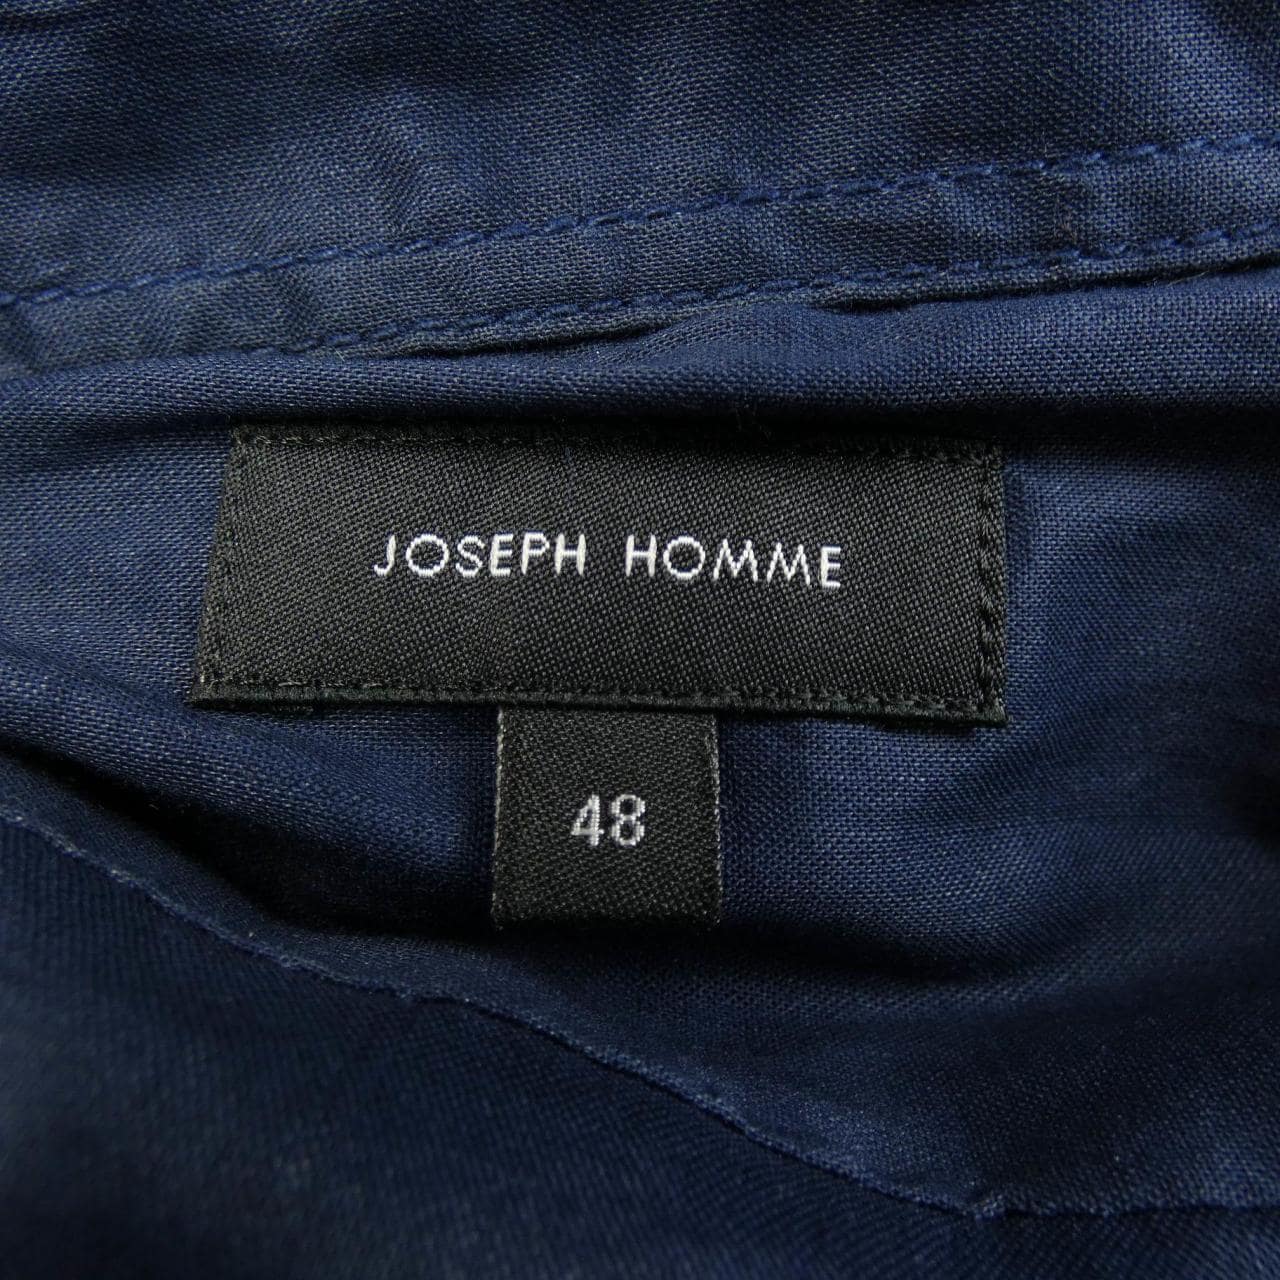 Joseph Homme Shirt